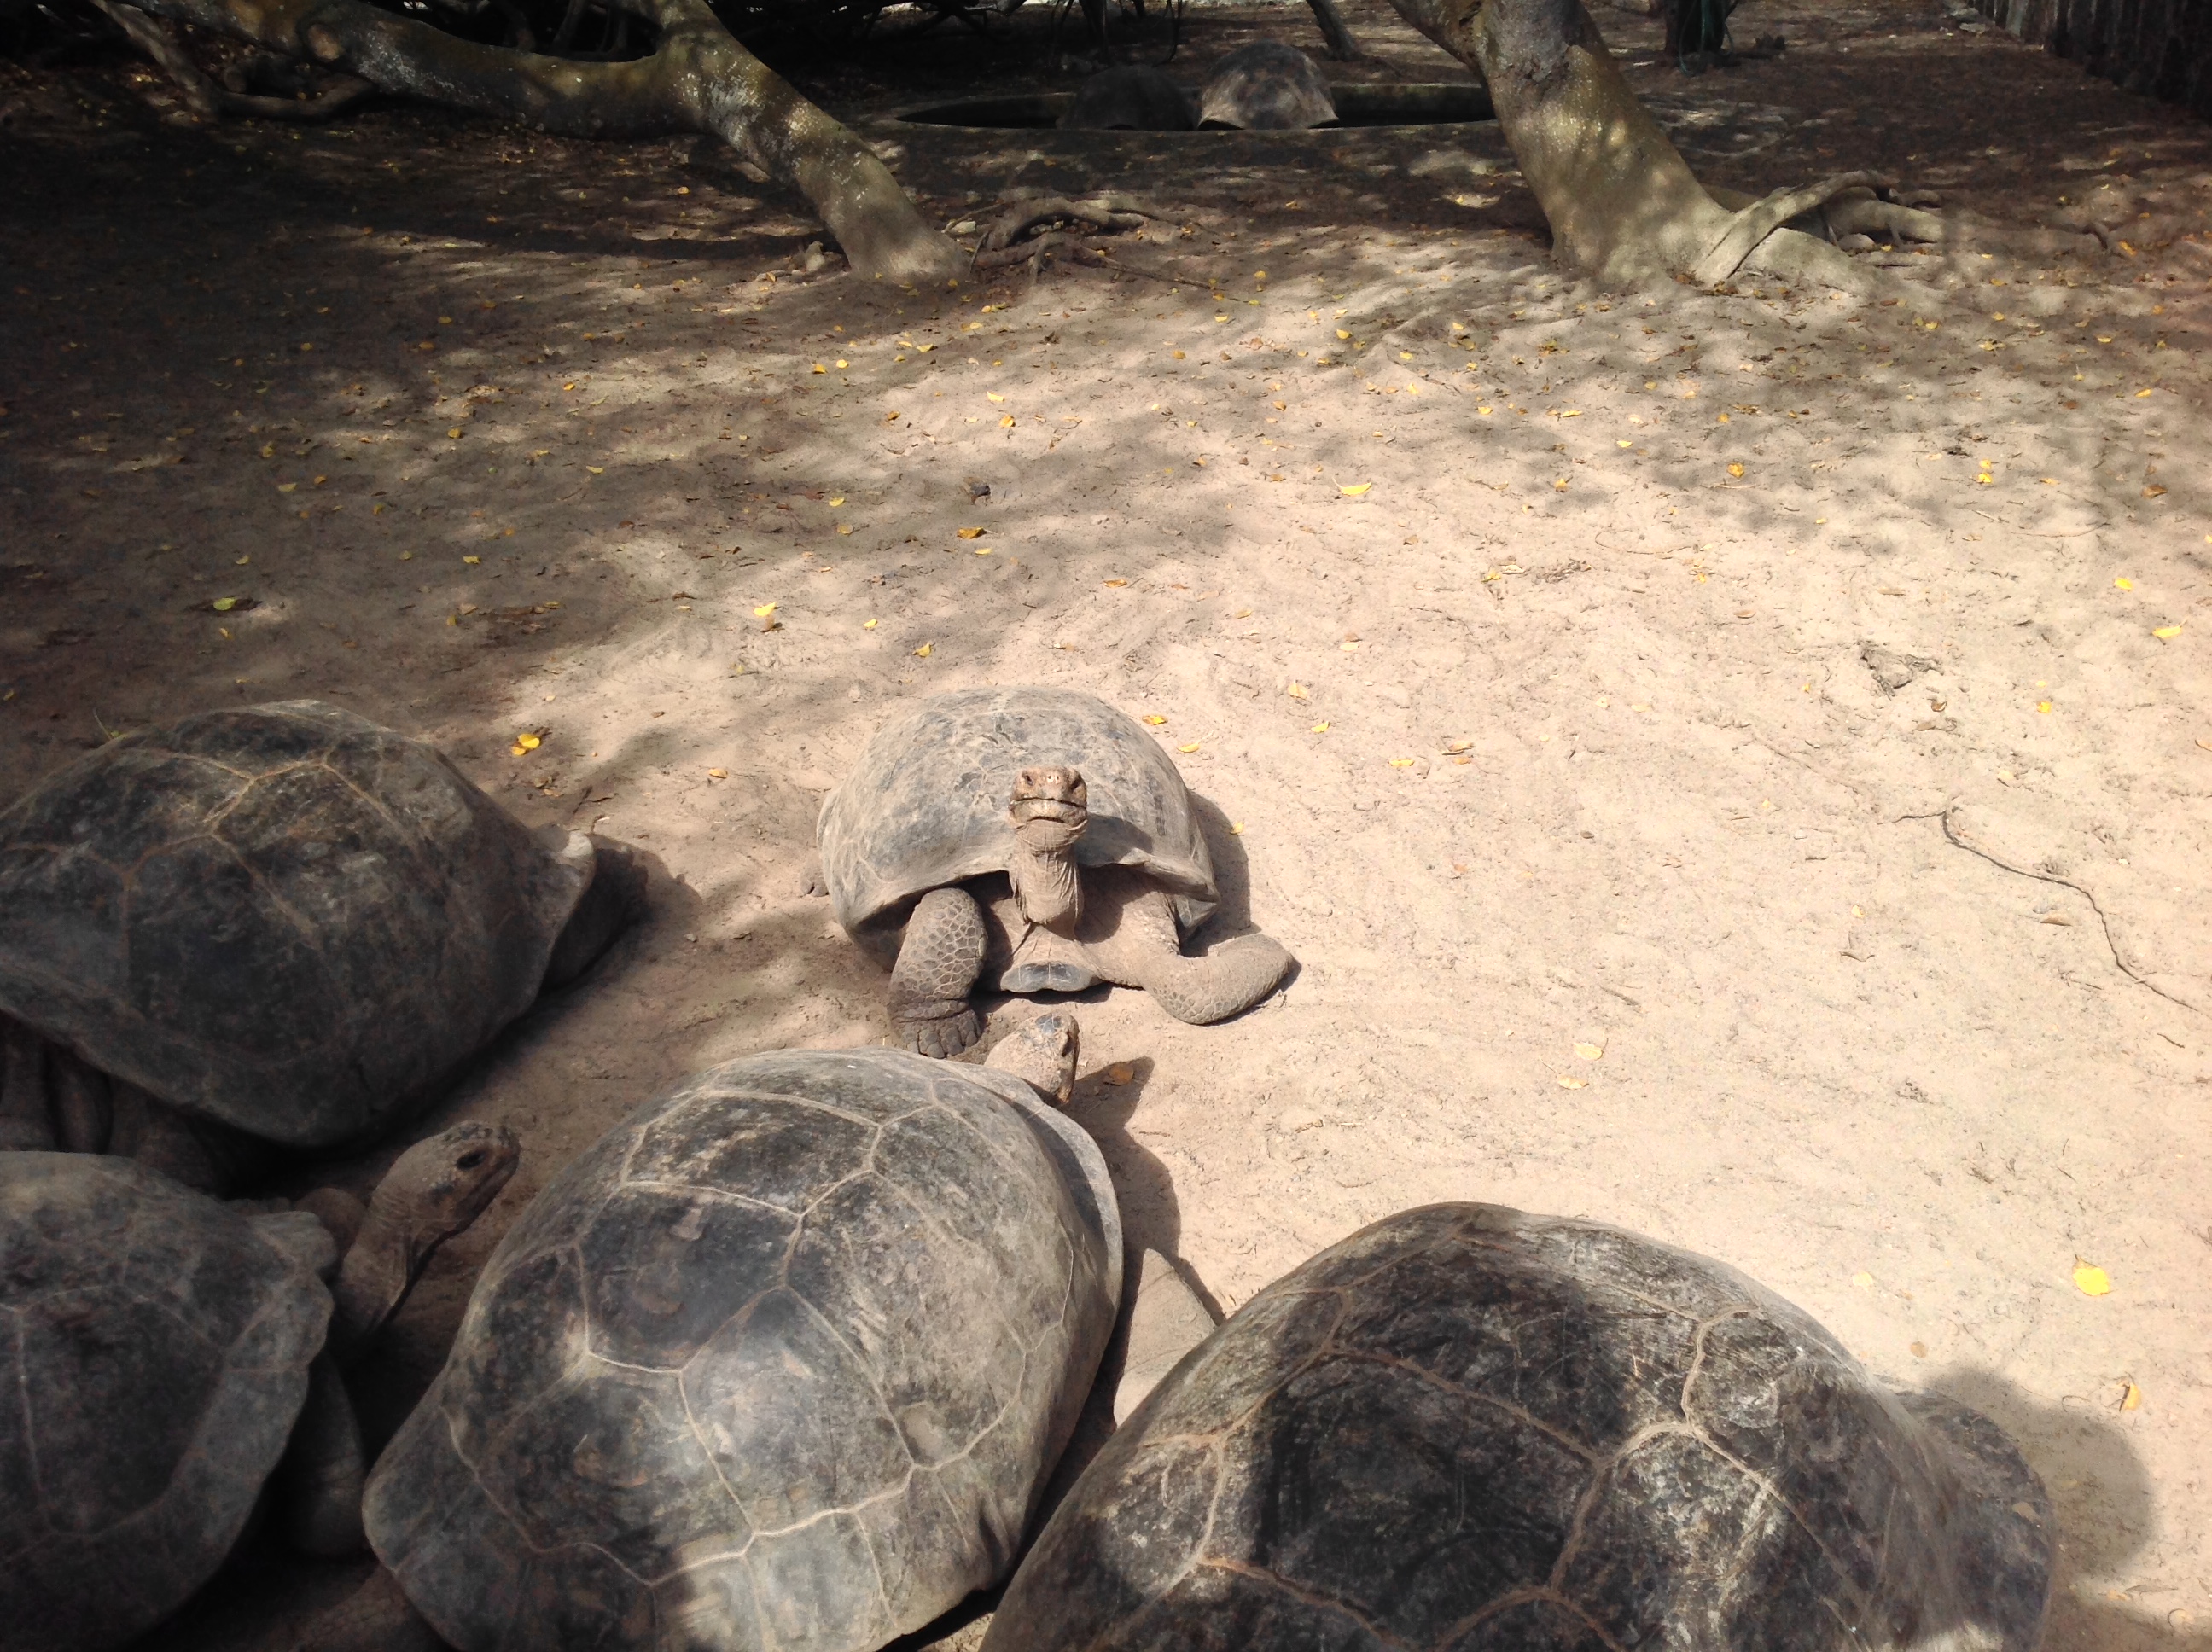 A few juvenile Galapagos Tortoises in the rehabilitation center. 